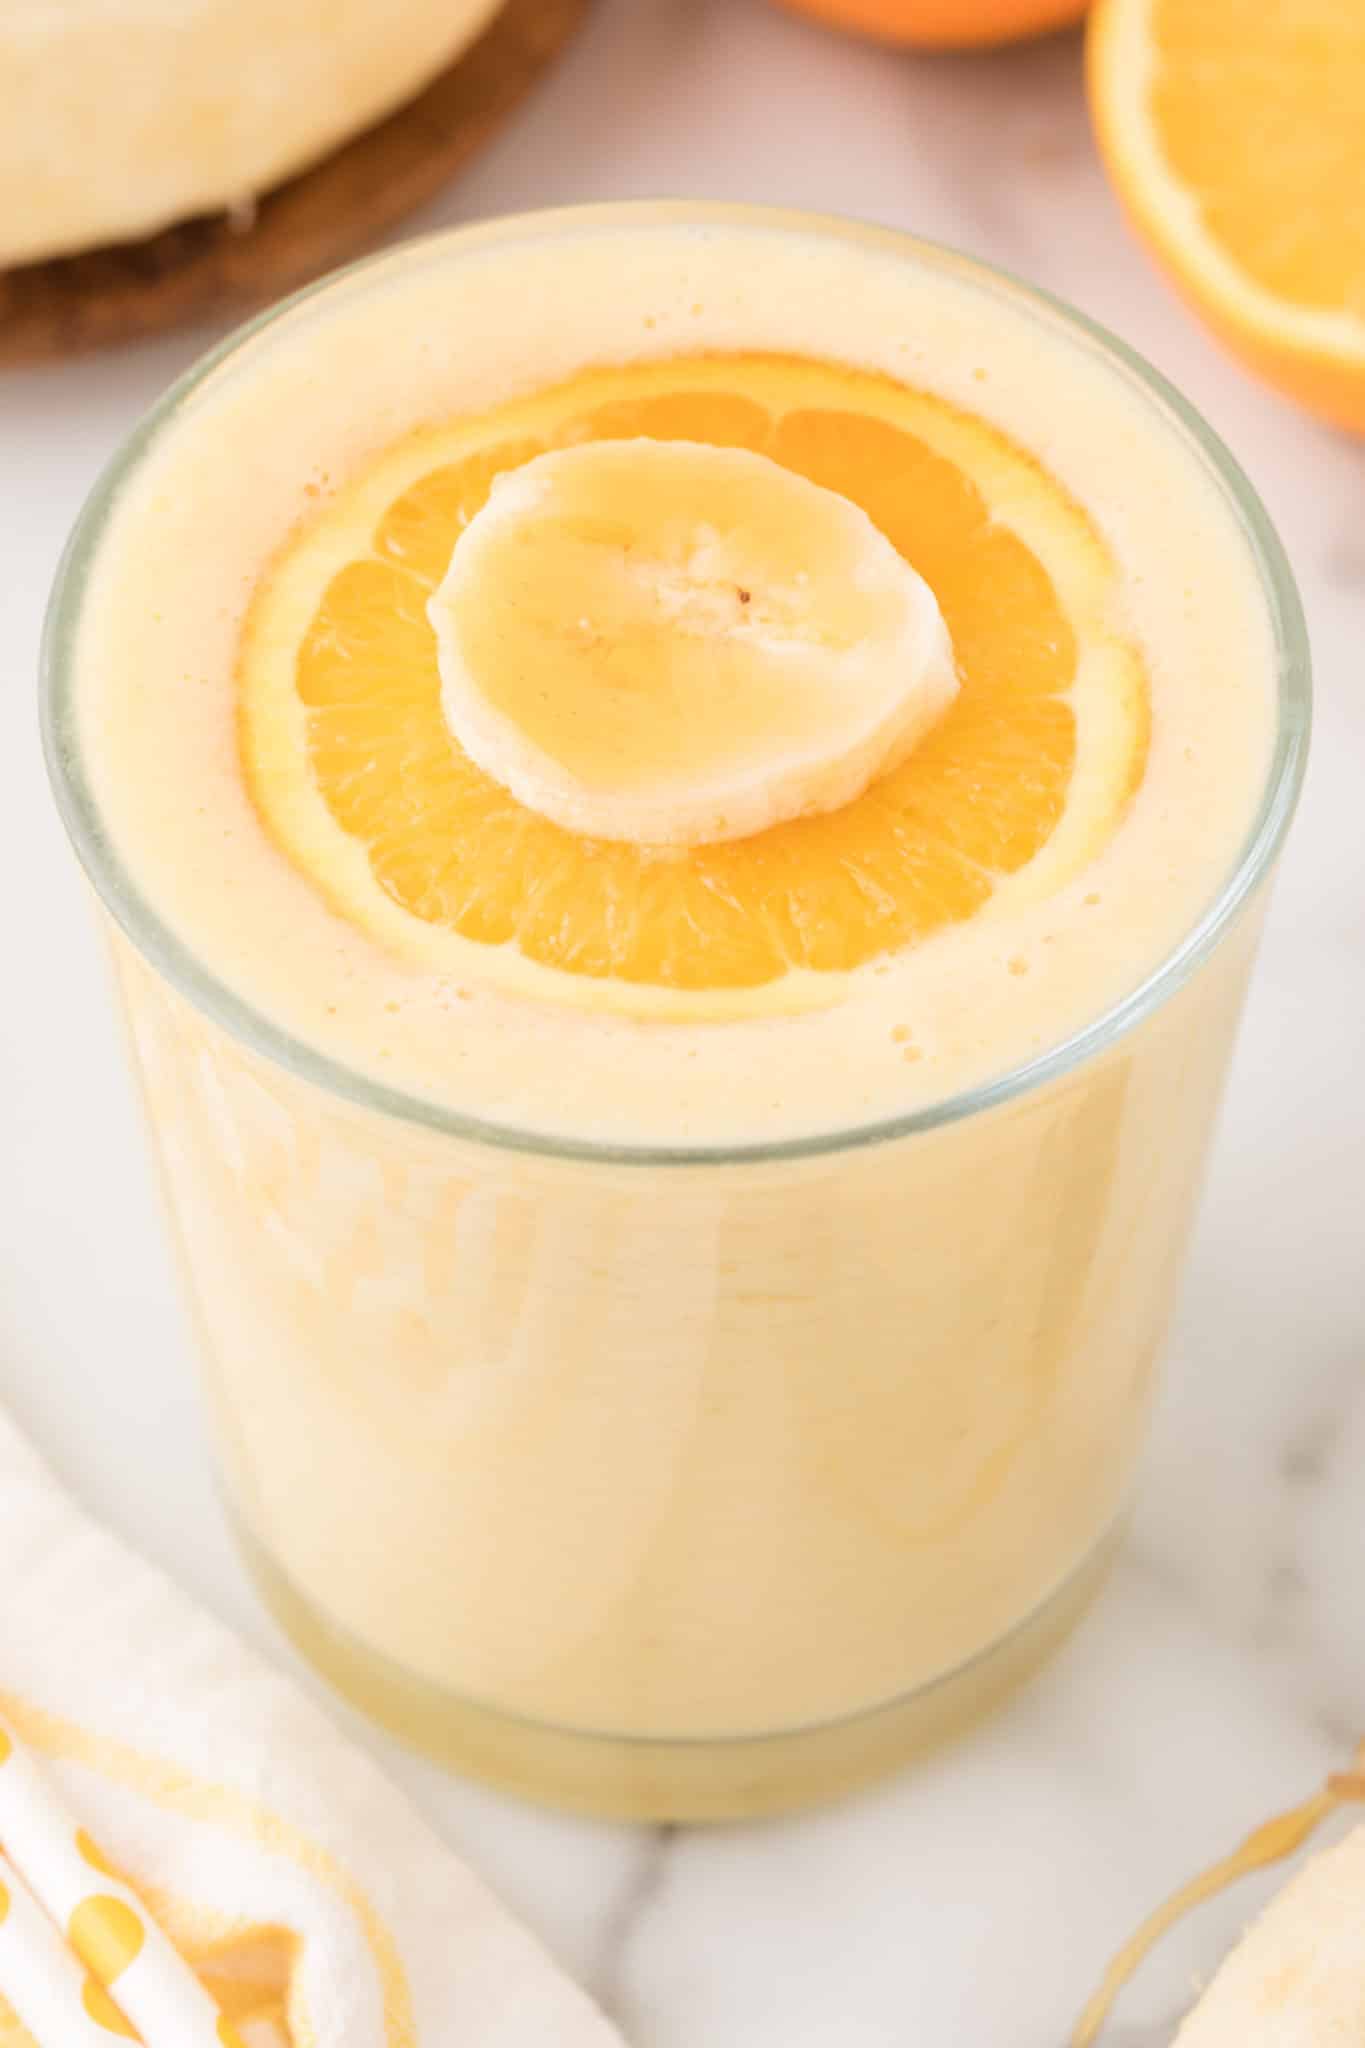 orange banana smoothie in glass topped with orange slice.